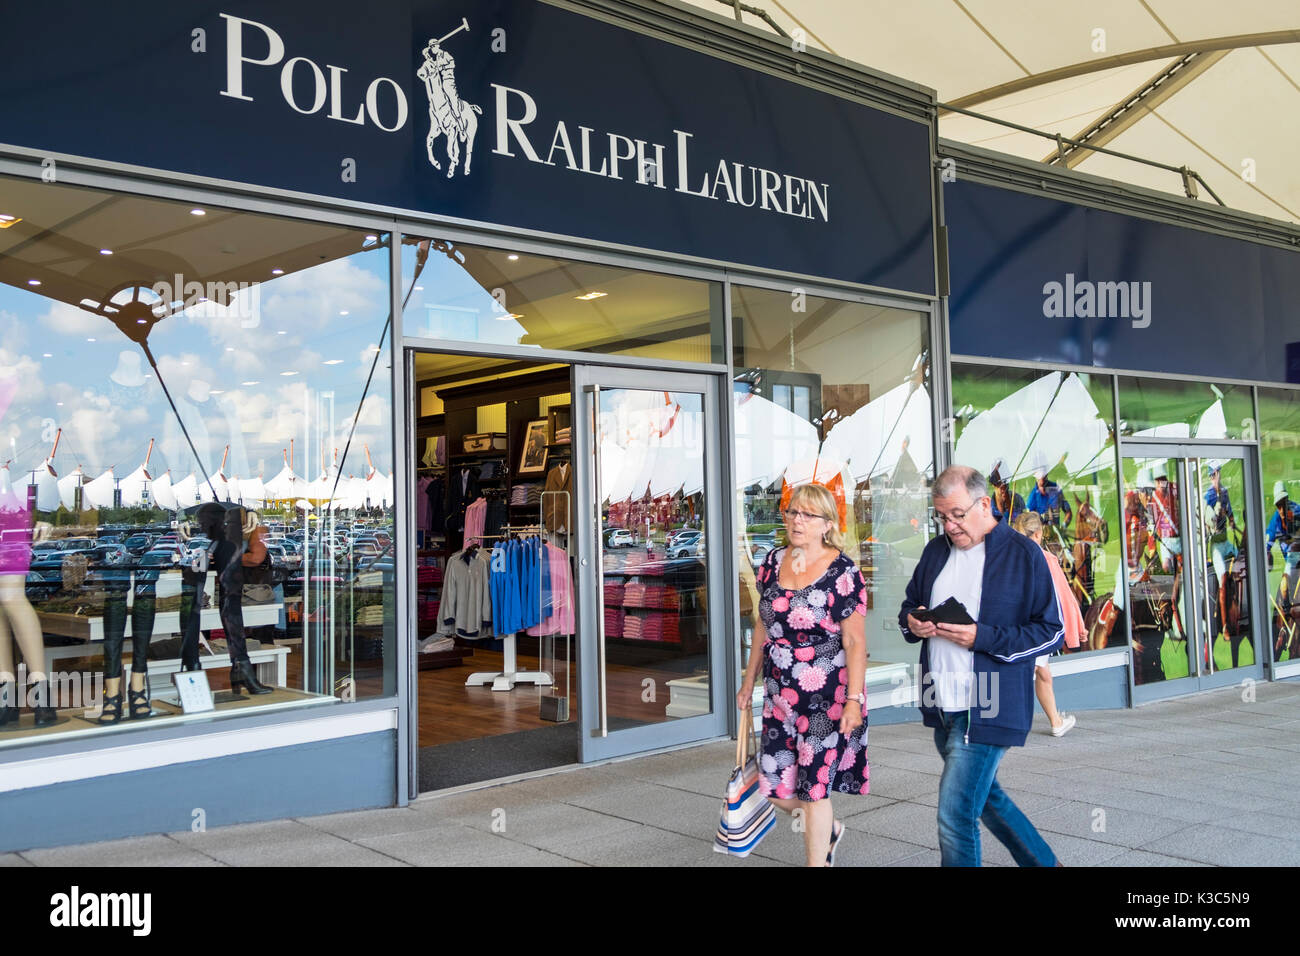 Polo ralph lauren shop Photo Stock - Alamy